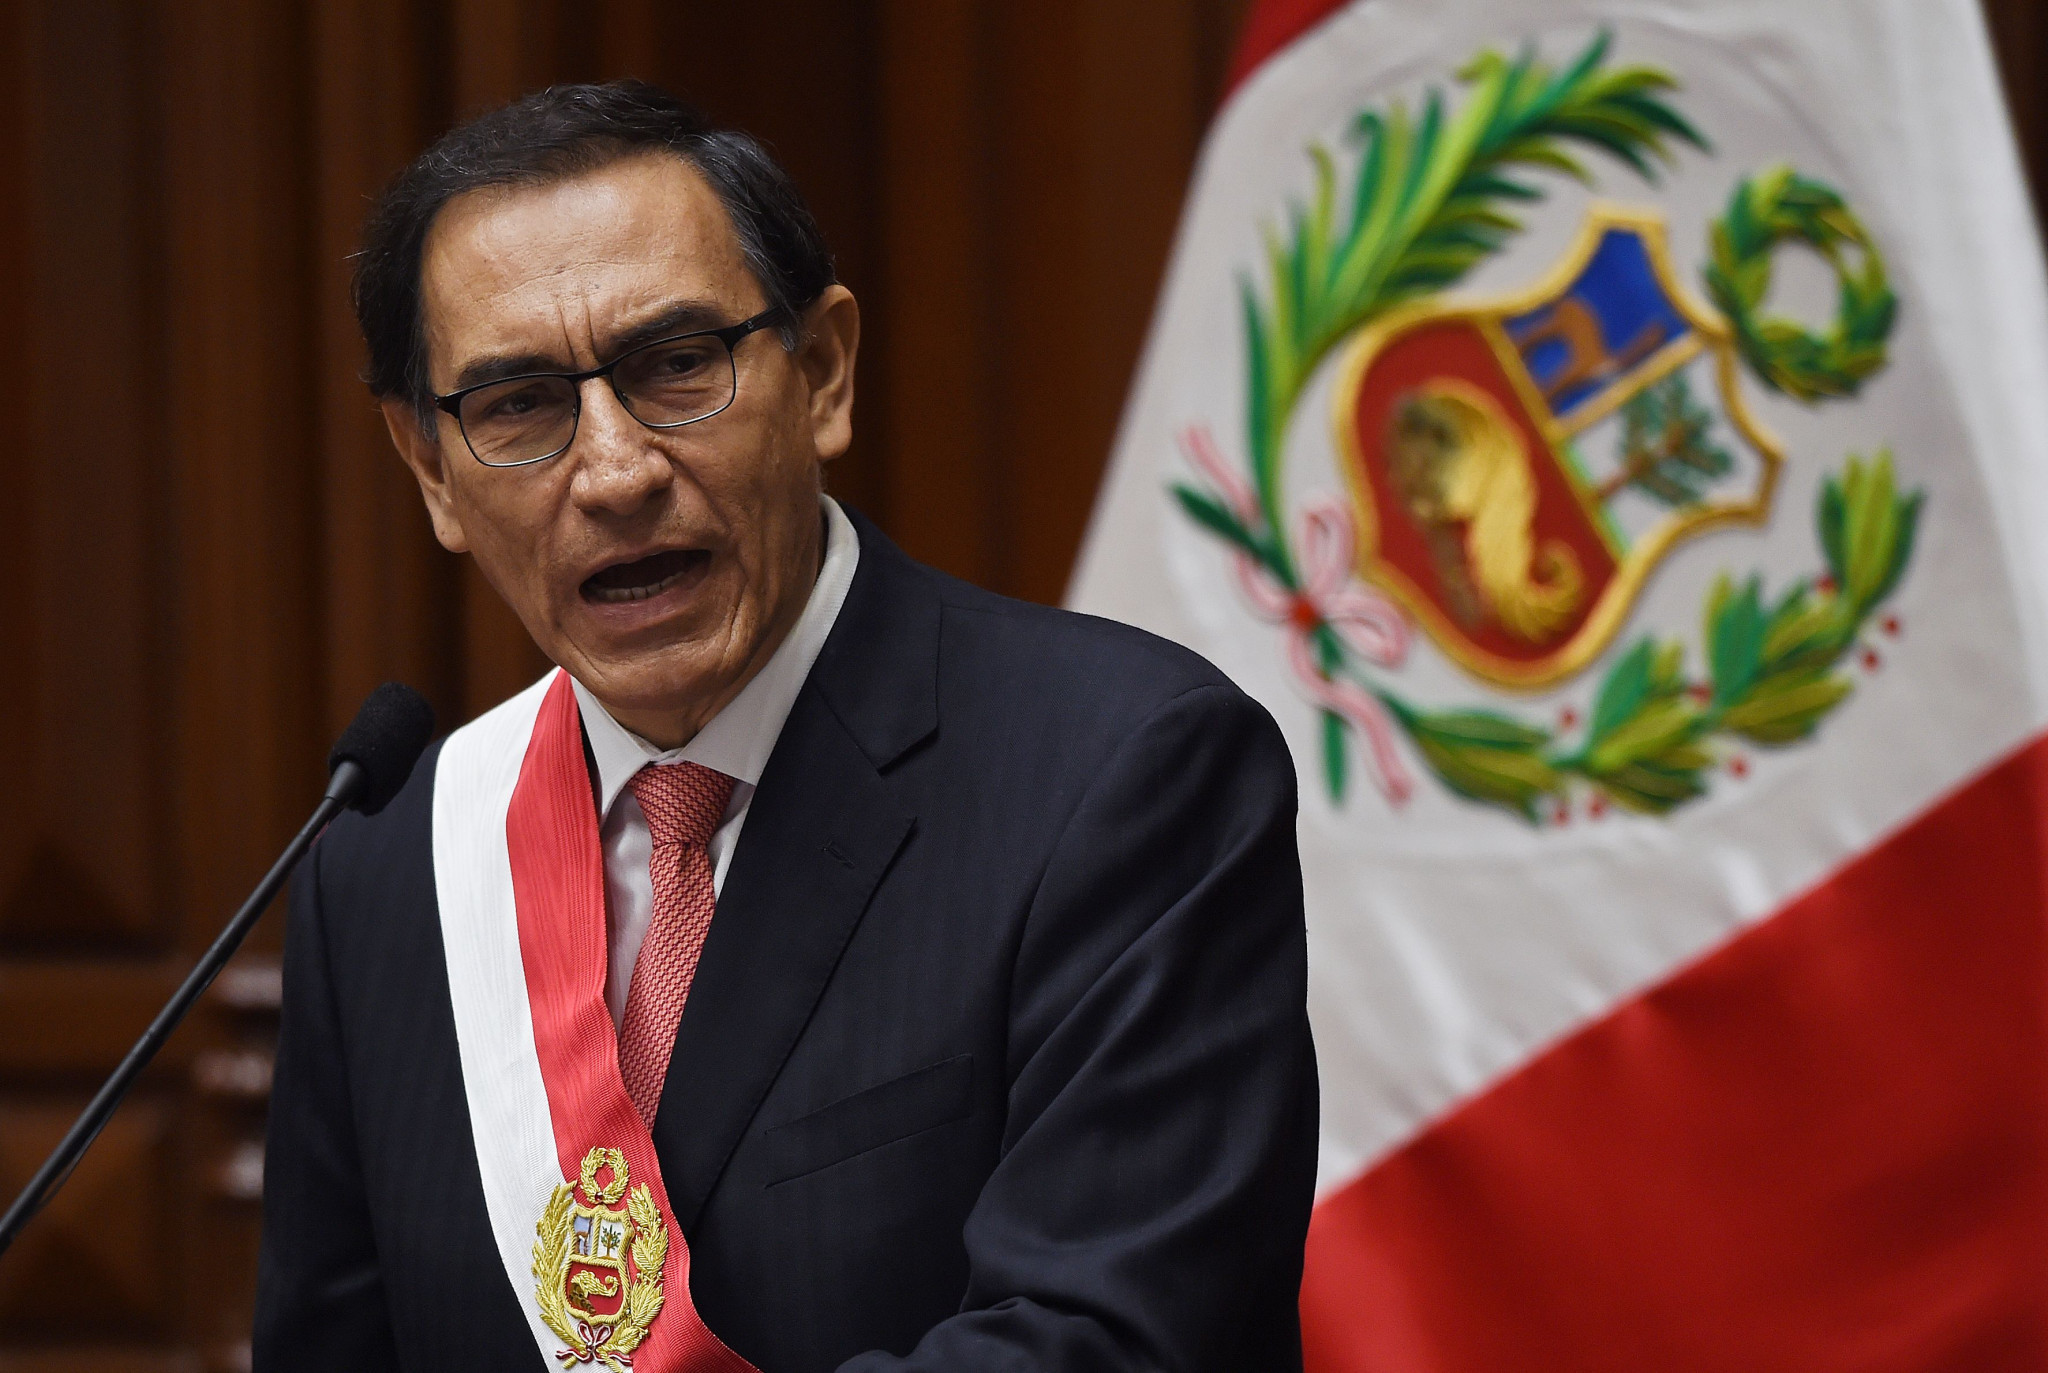 Peruvian President praises Lima 2019 progress and looks forward to legacy